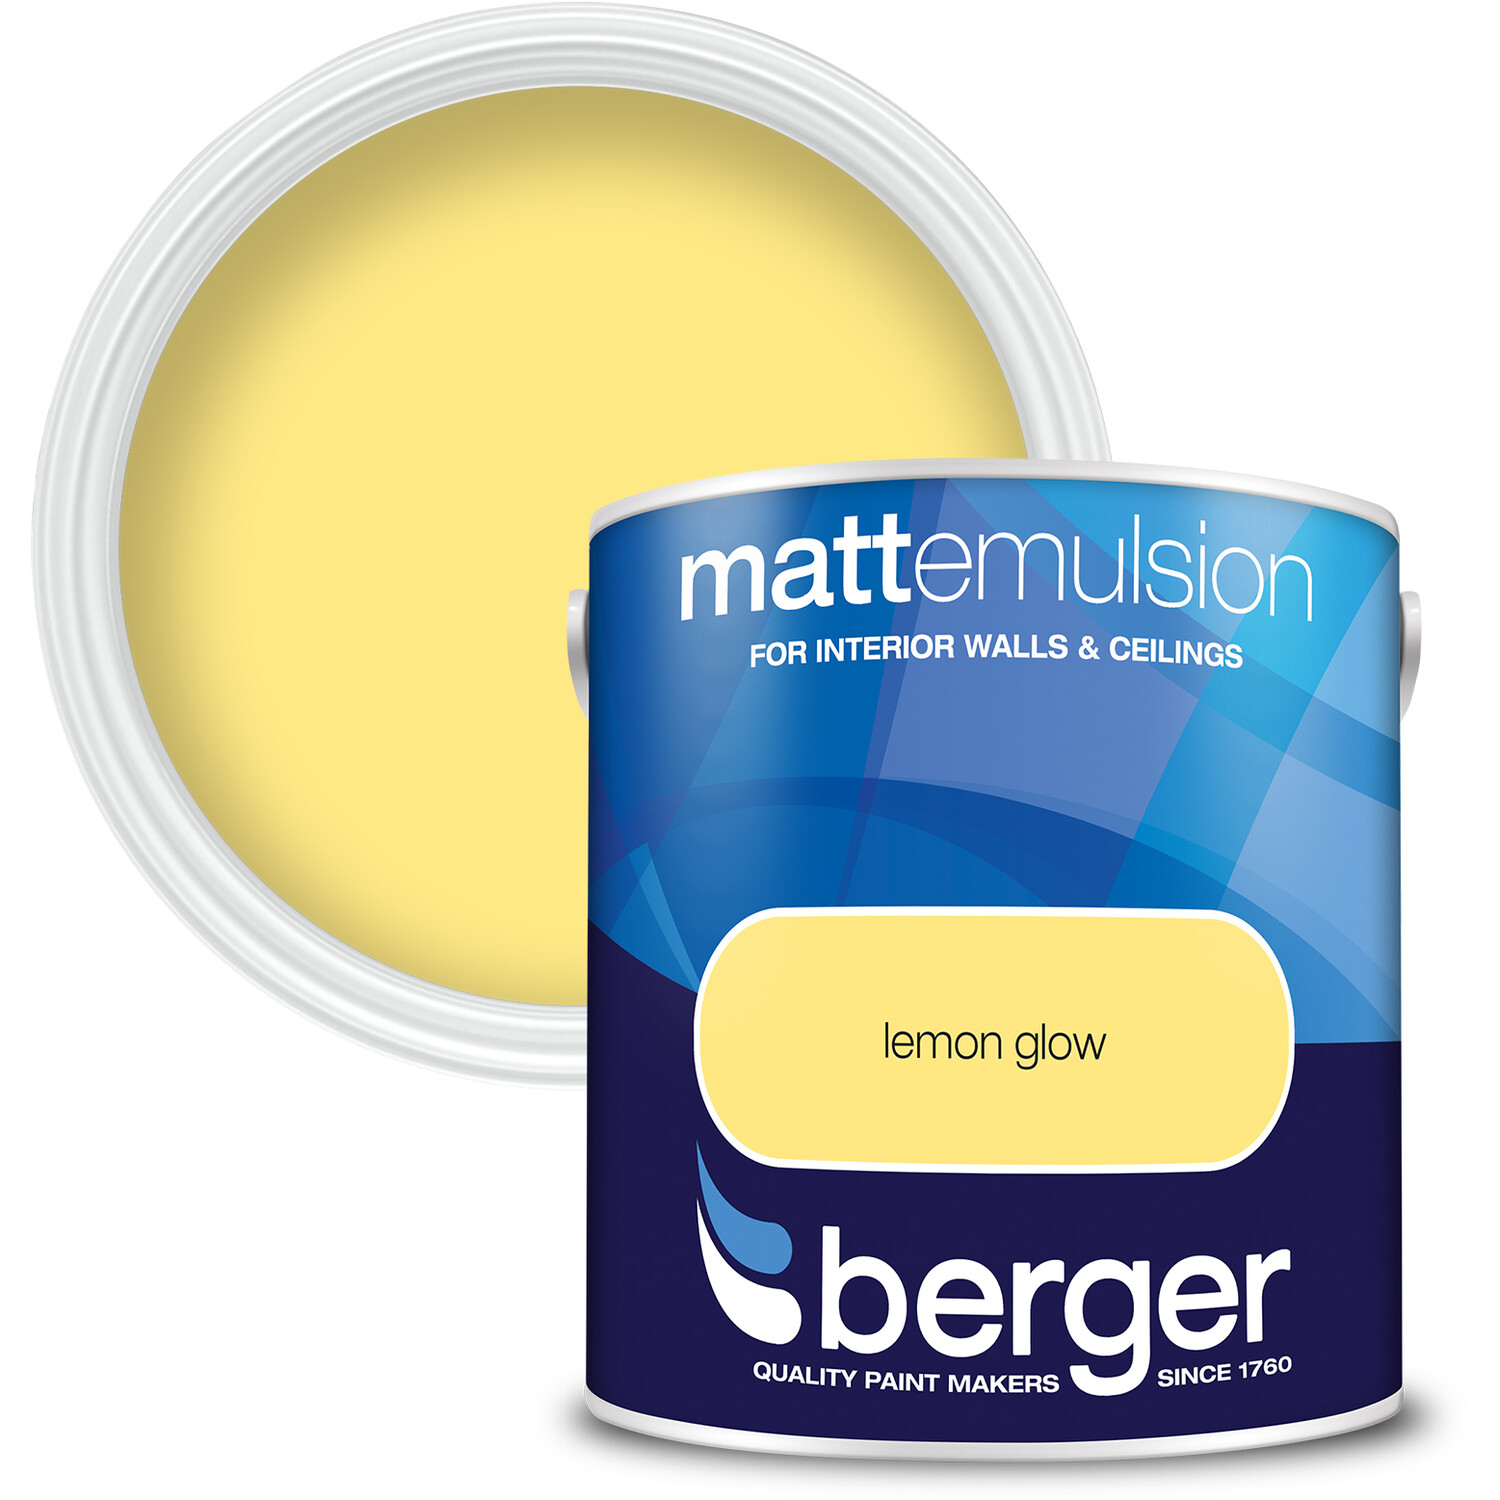 Berger Walls & Ceilings Lemon Glow Matt Emulsion Paint 2.5L Image 1